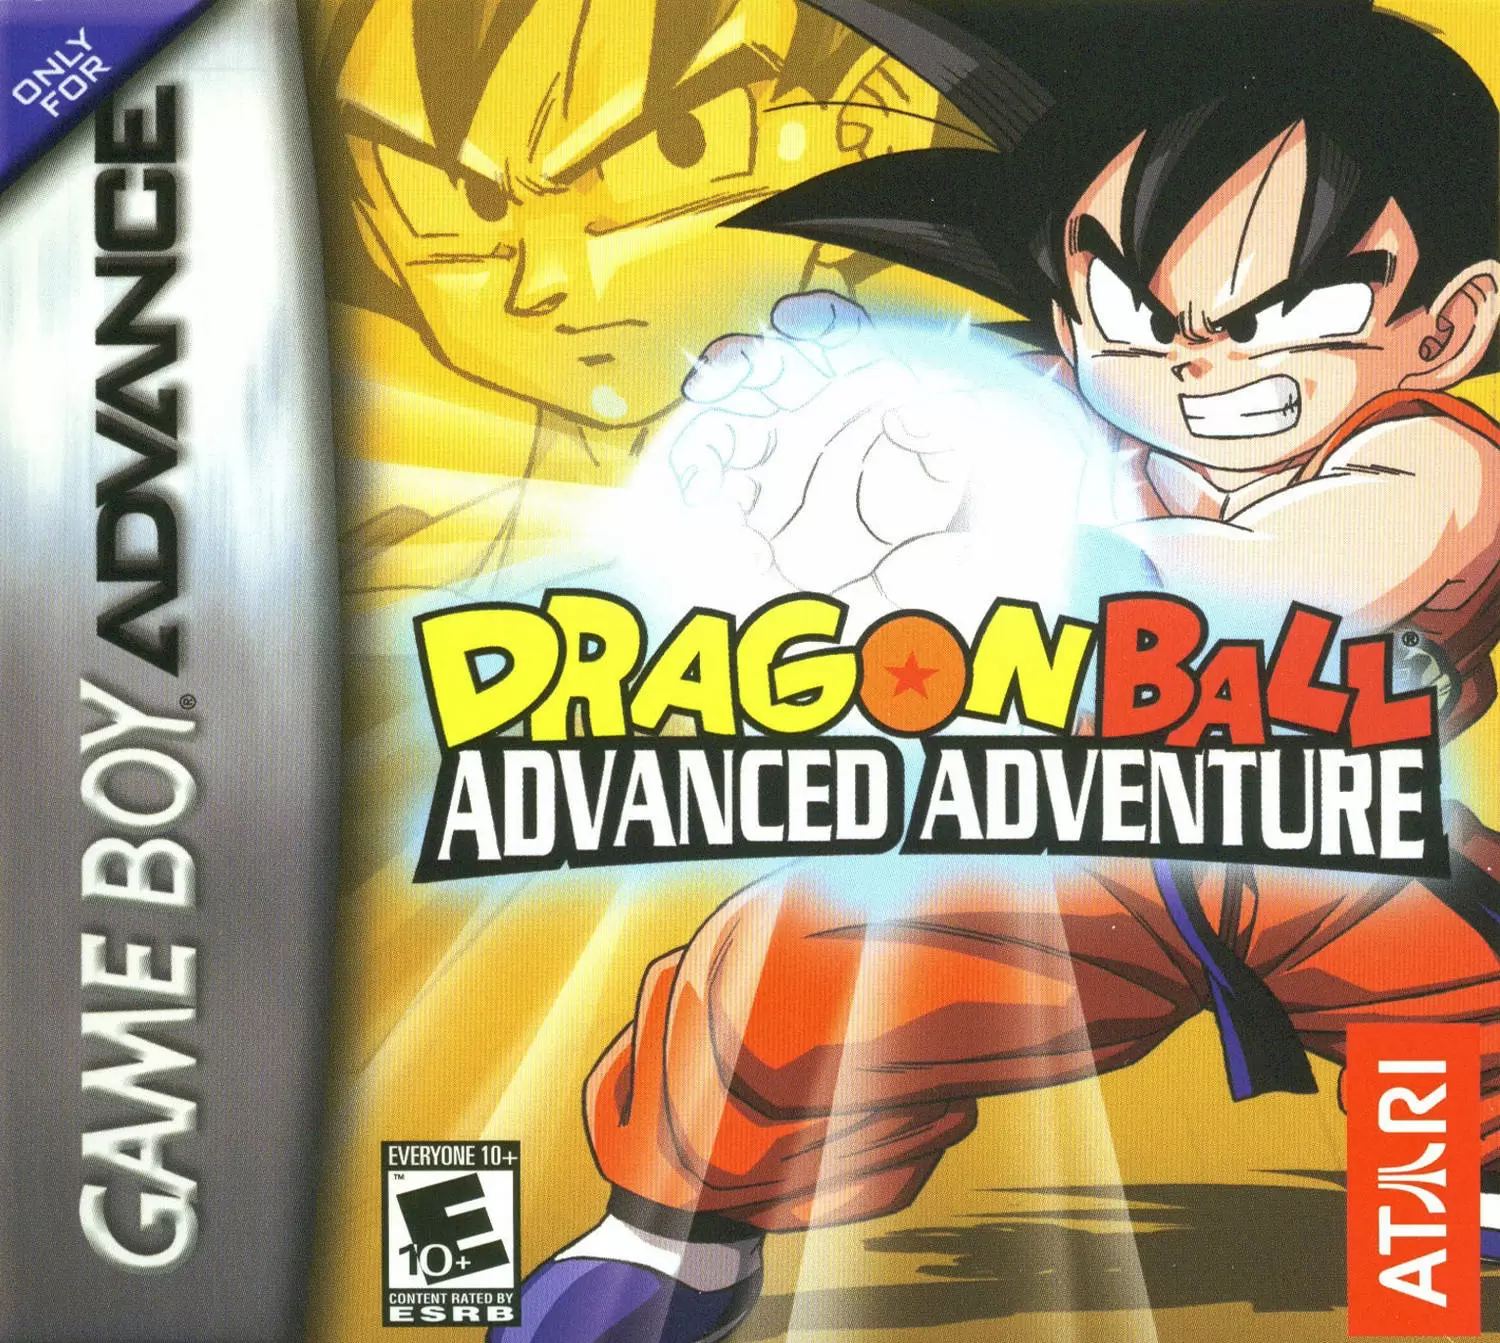 Game Boy Advance Games - Dragon Ball: Advanced Adventure